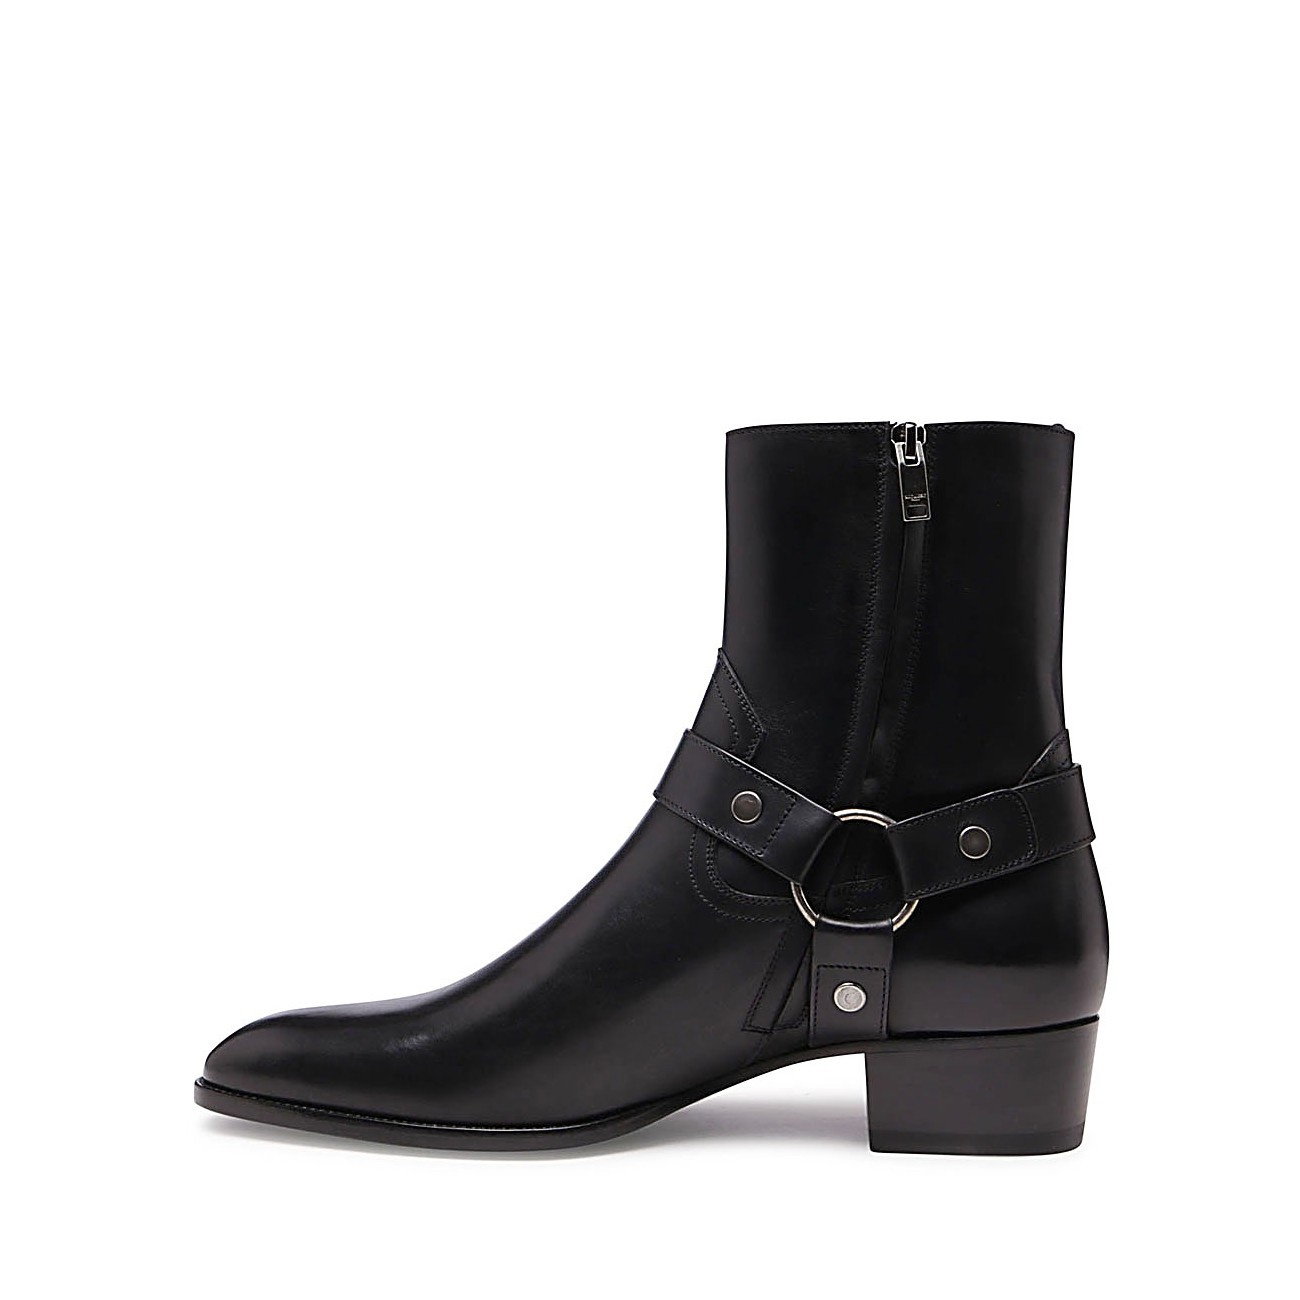 black leather wyatt harness boots - 2